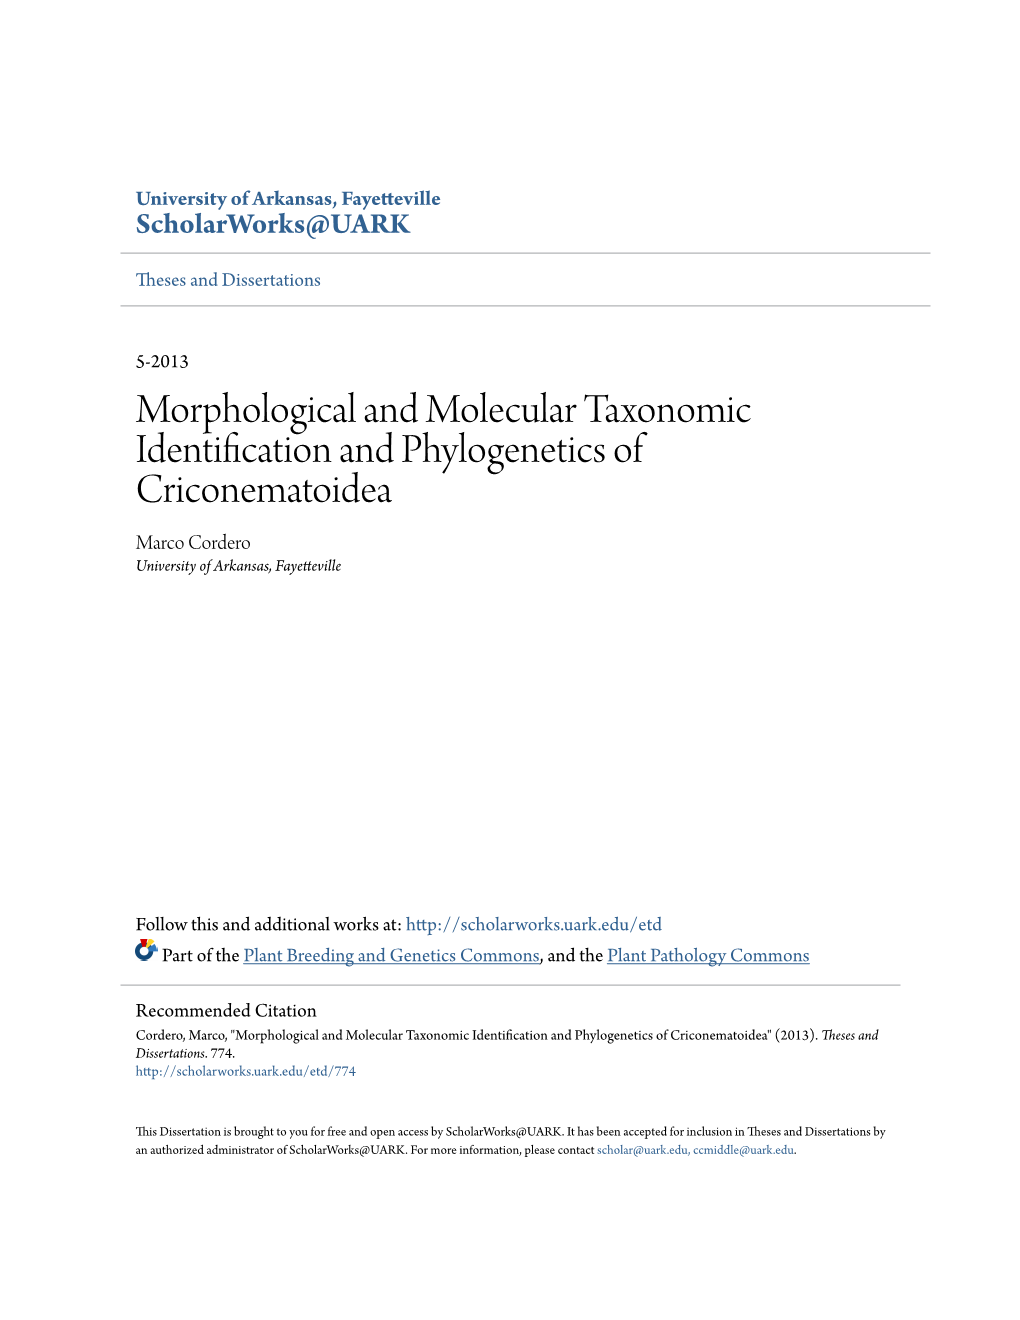 Morphological and Molecular Taxonomic Identification and Phylogenetics of Criconematoidea Marco Cordero University of Arkansas, Fayetteville